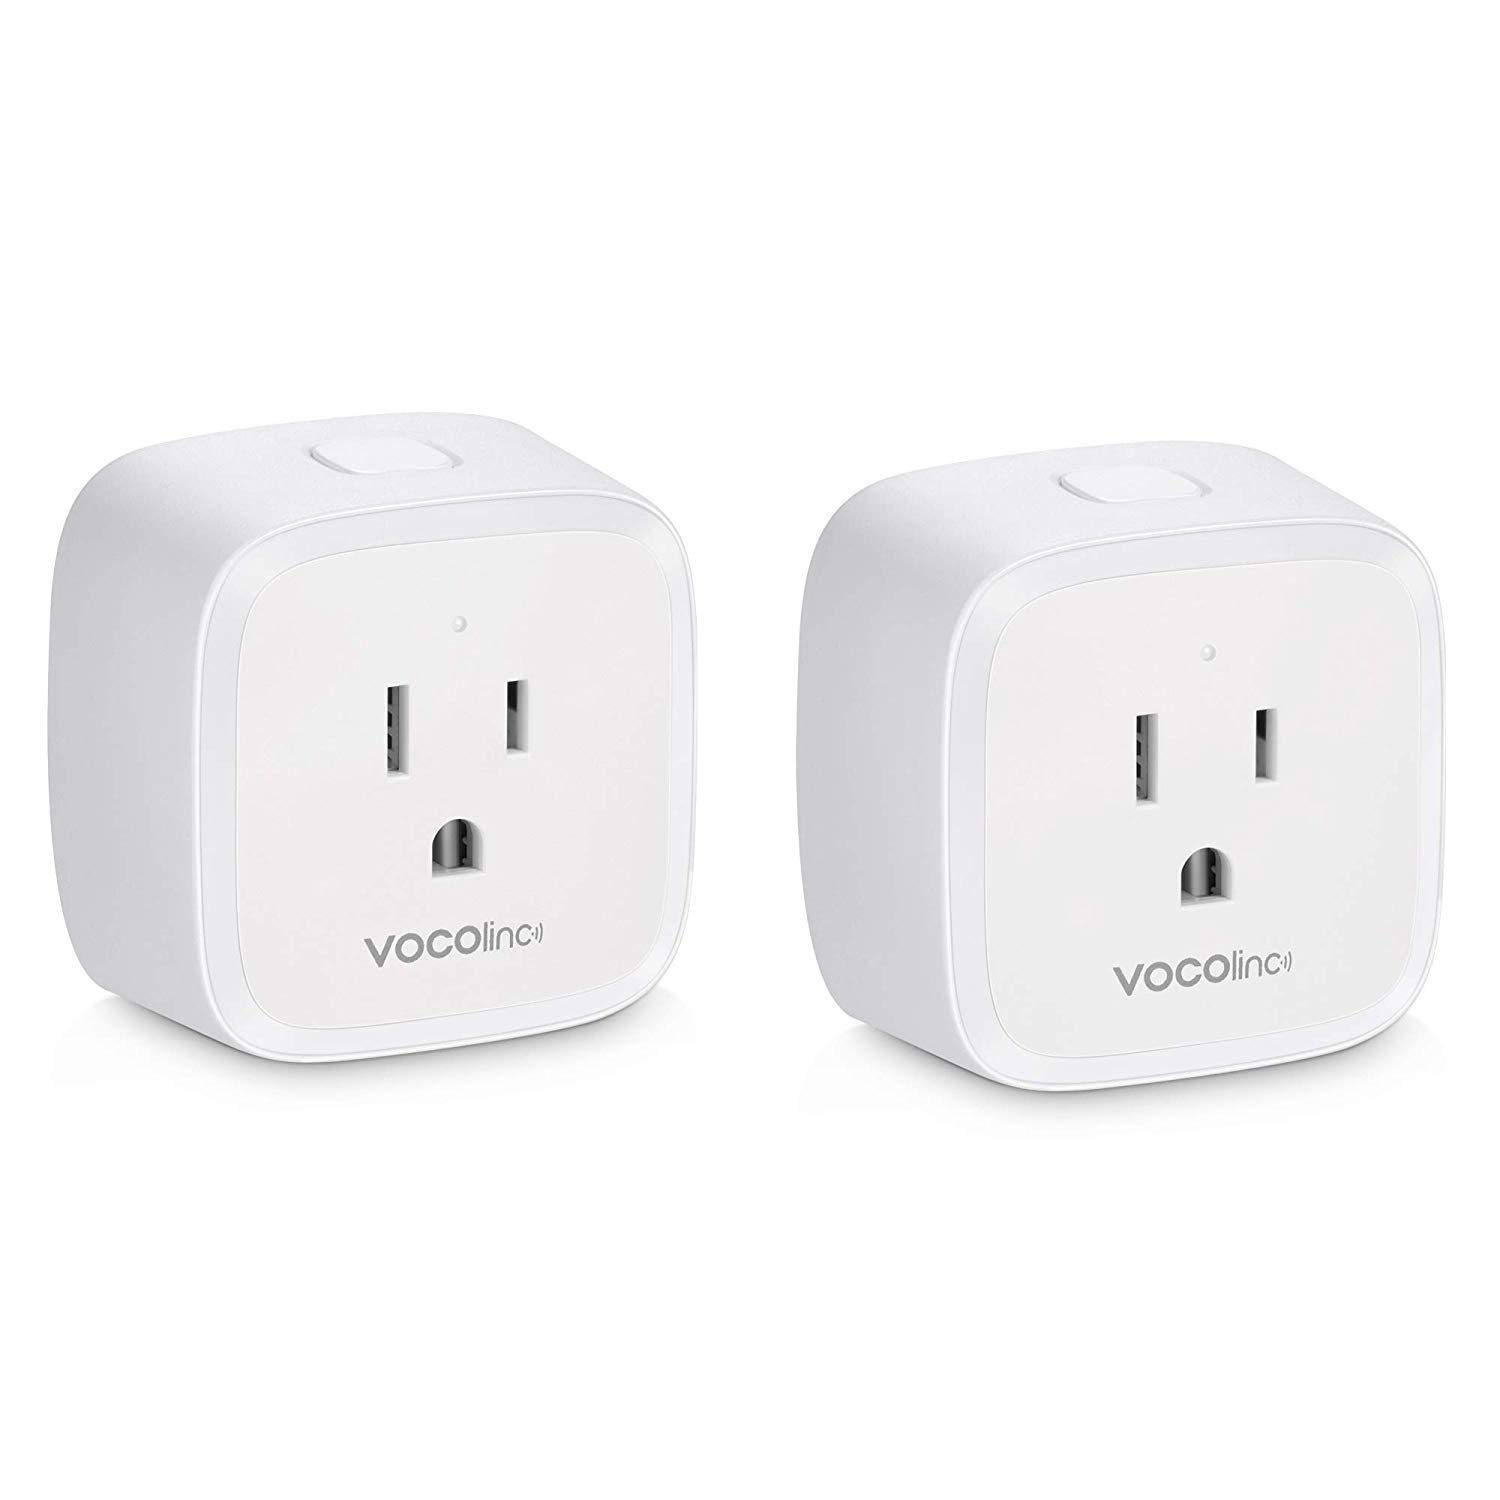 VOCOlinc smart plug set of 2.